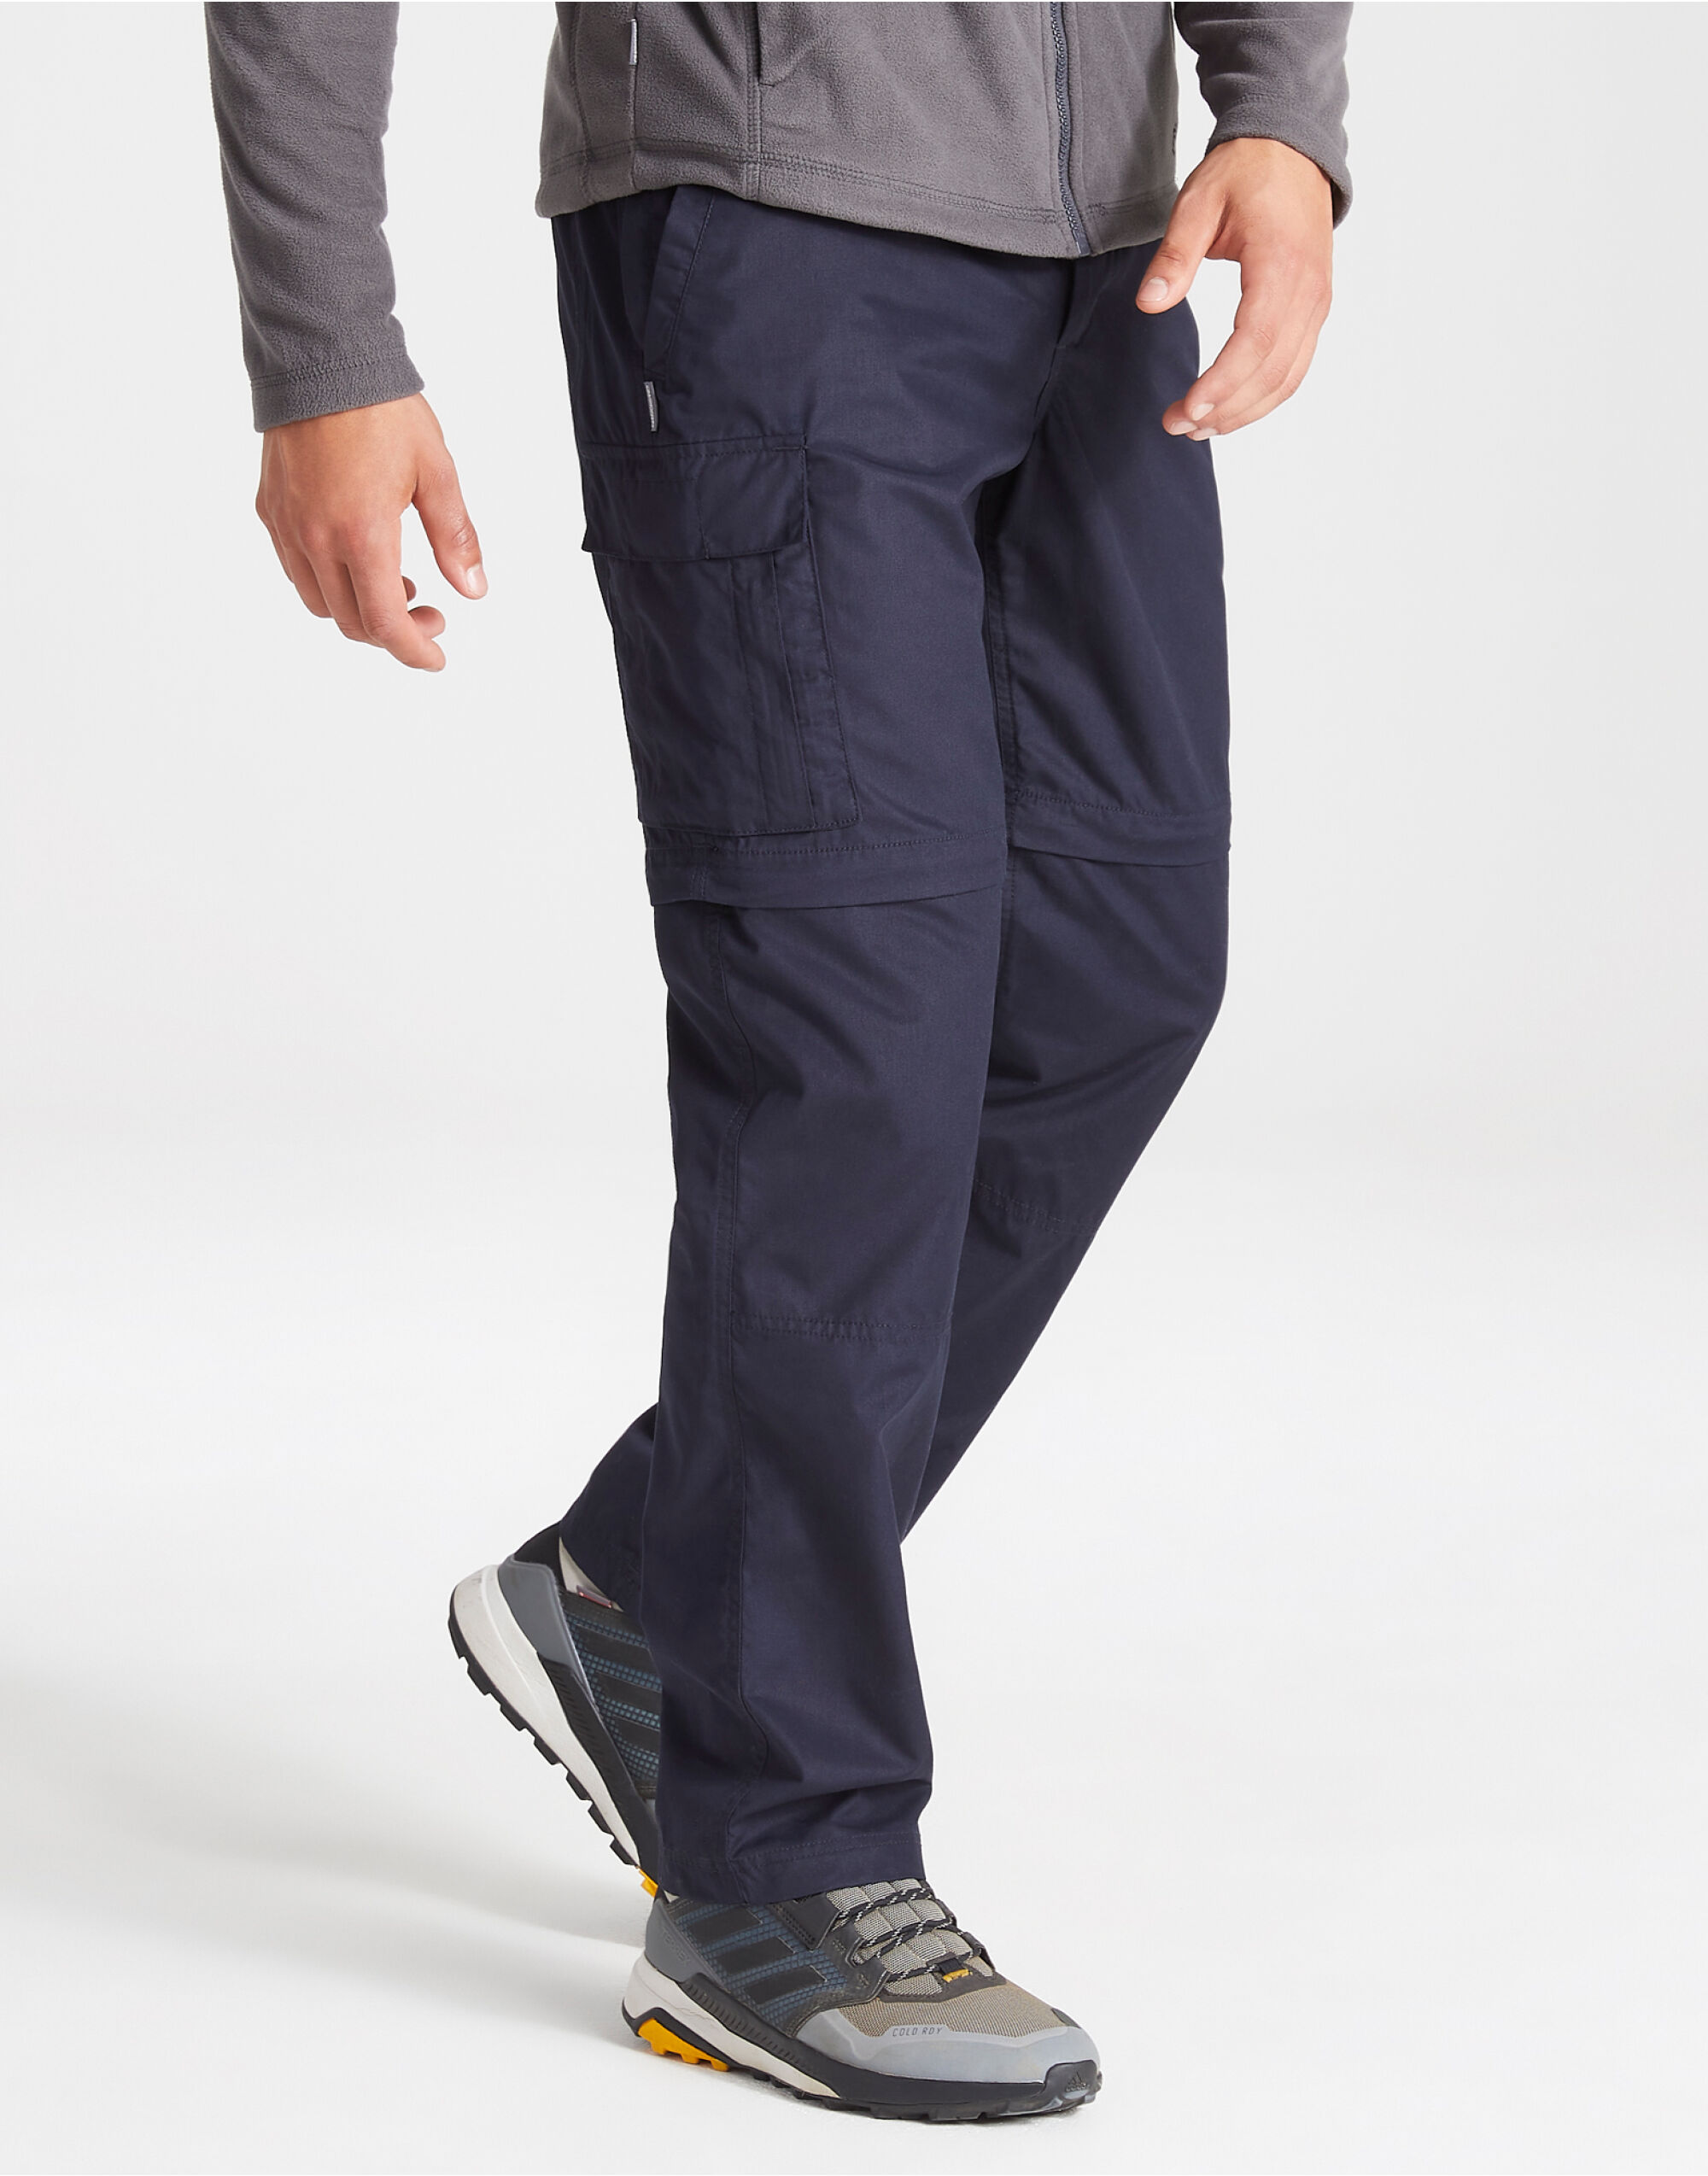 Men's Expert Kiwi Tailored Convertible Trousers (Short)